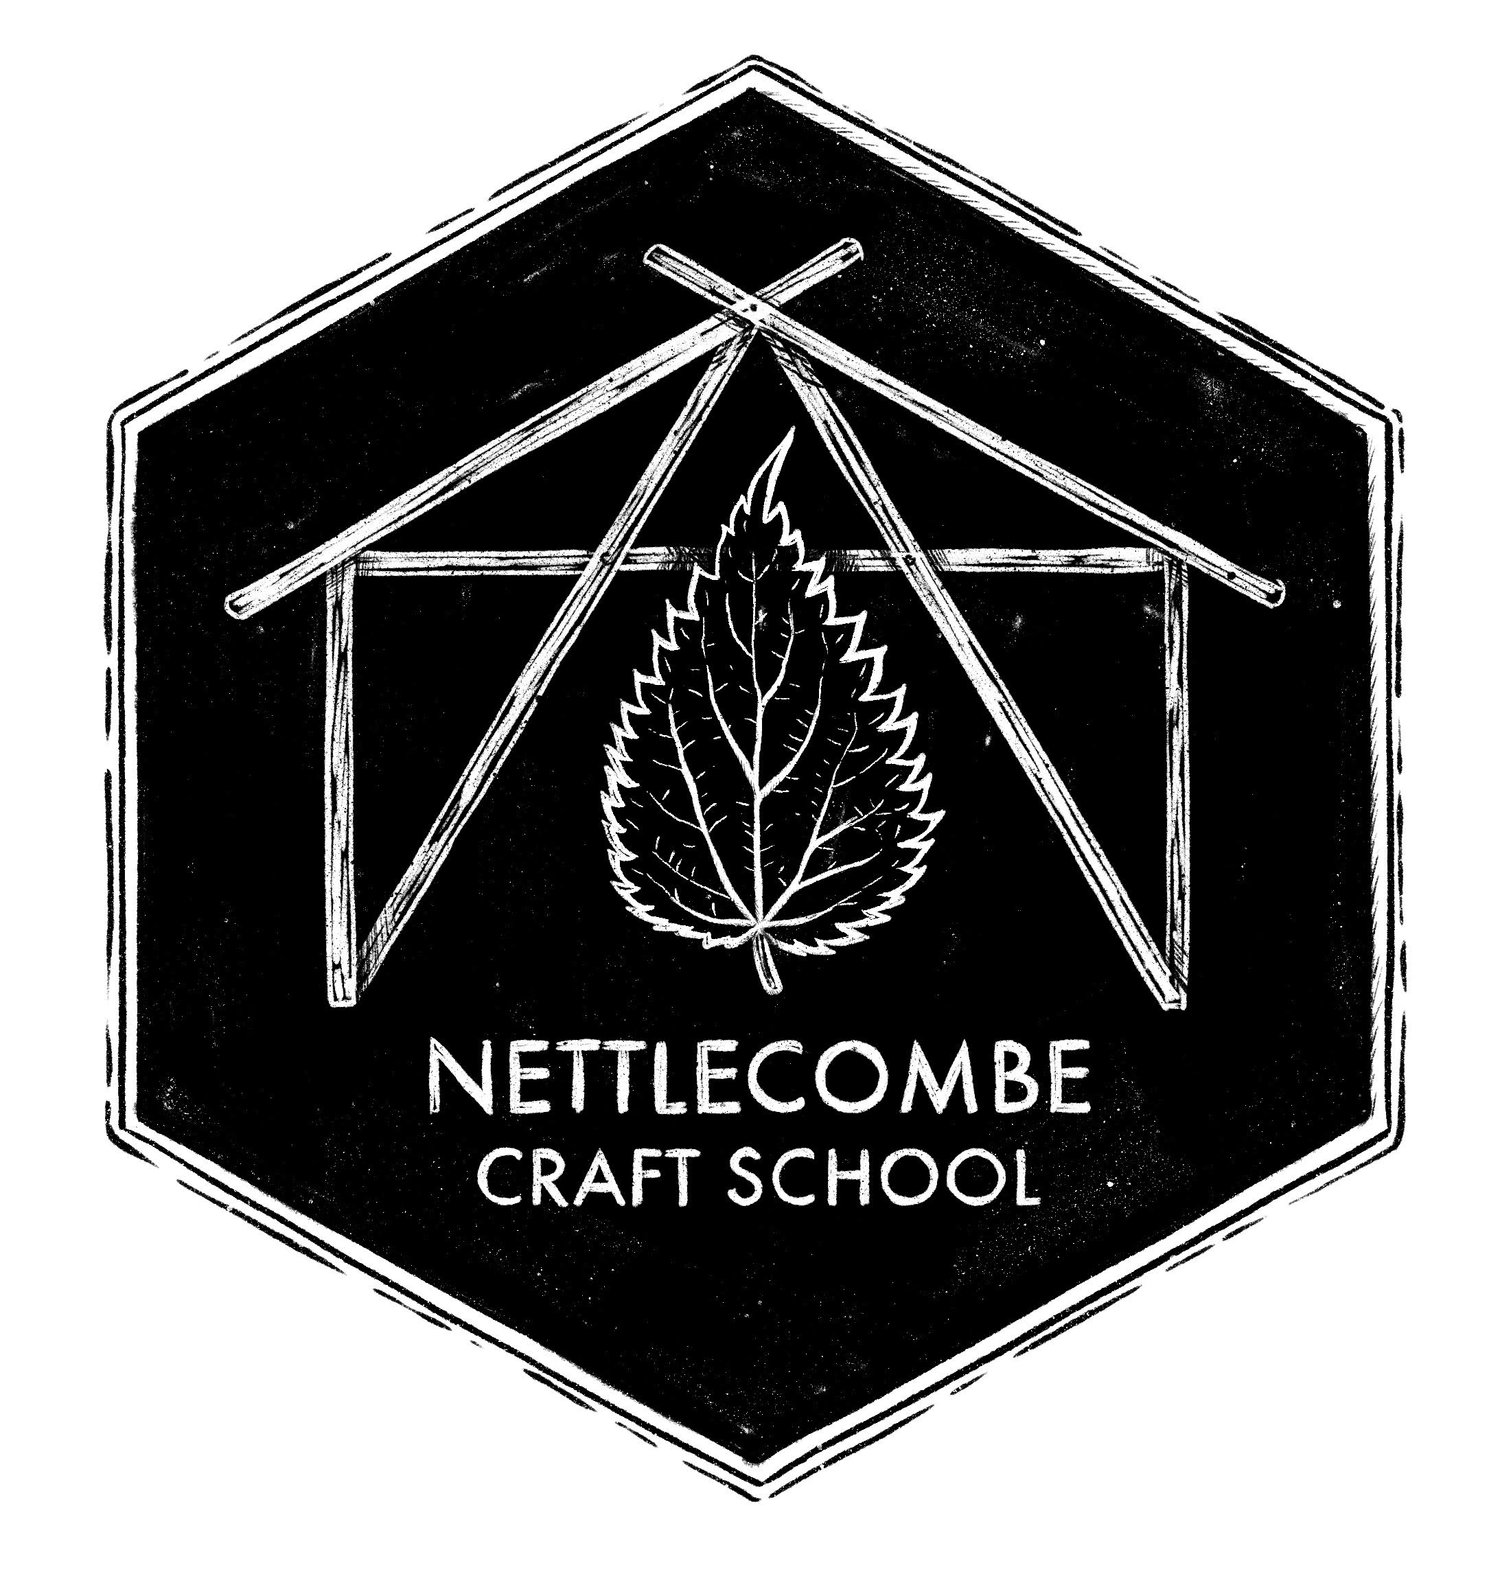 Nettlecombe Craft School